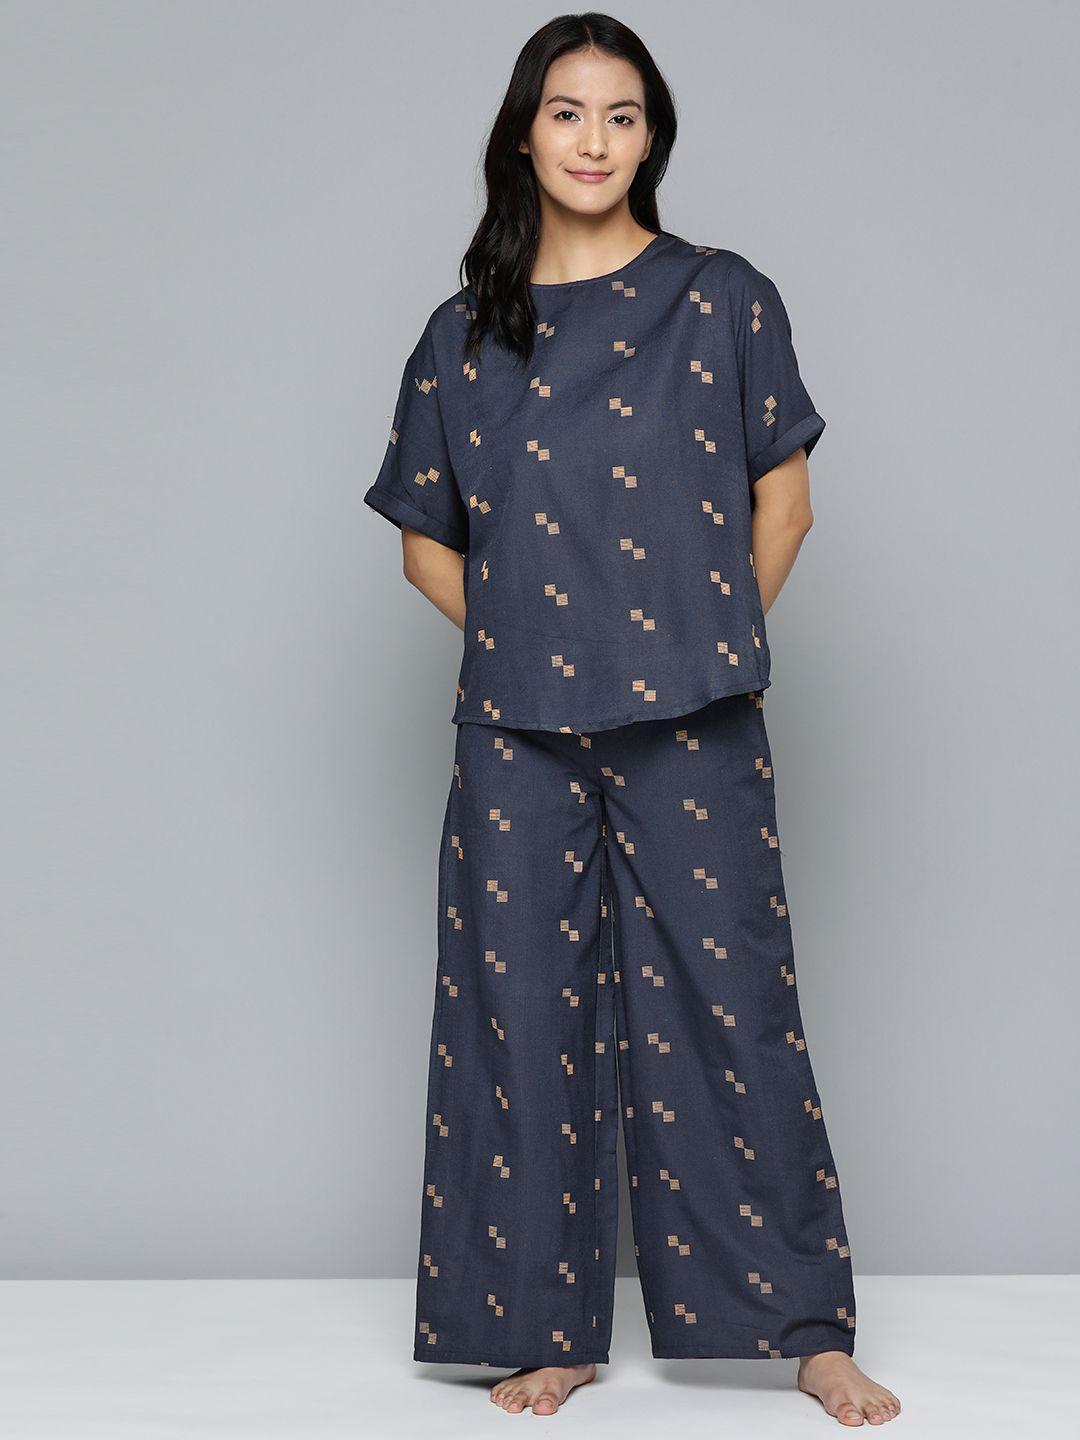 here&now women navy blue & beige printed pyjama set